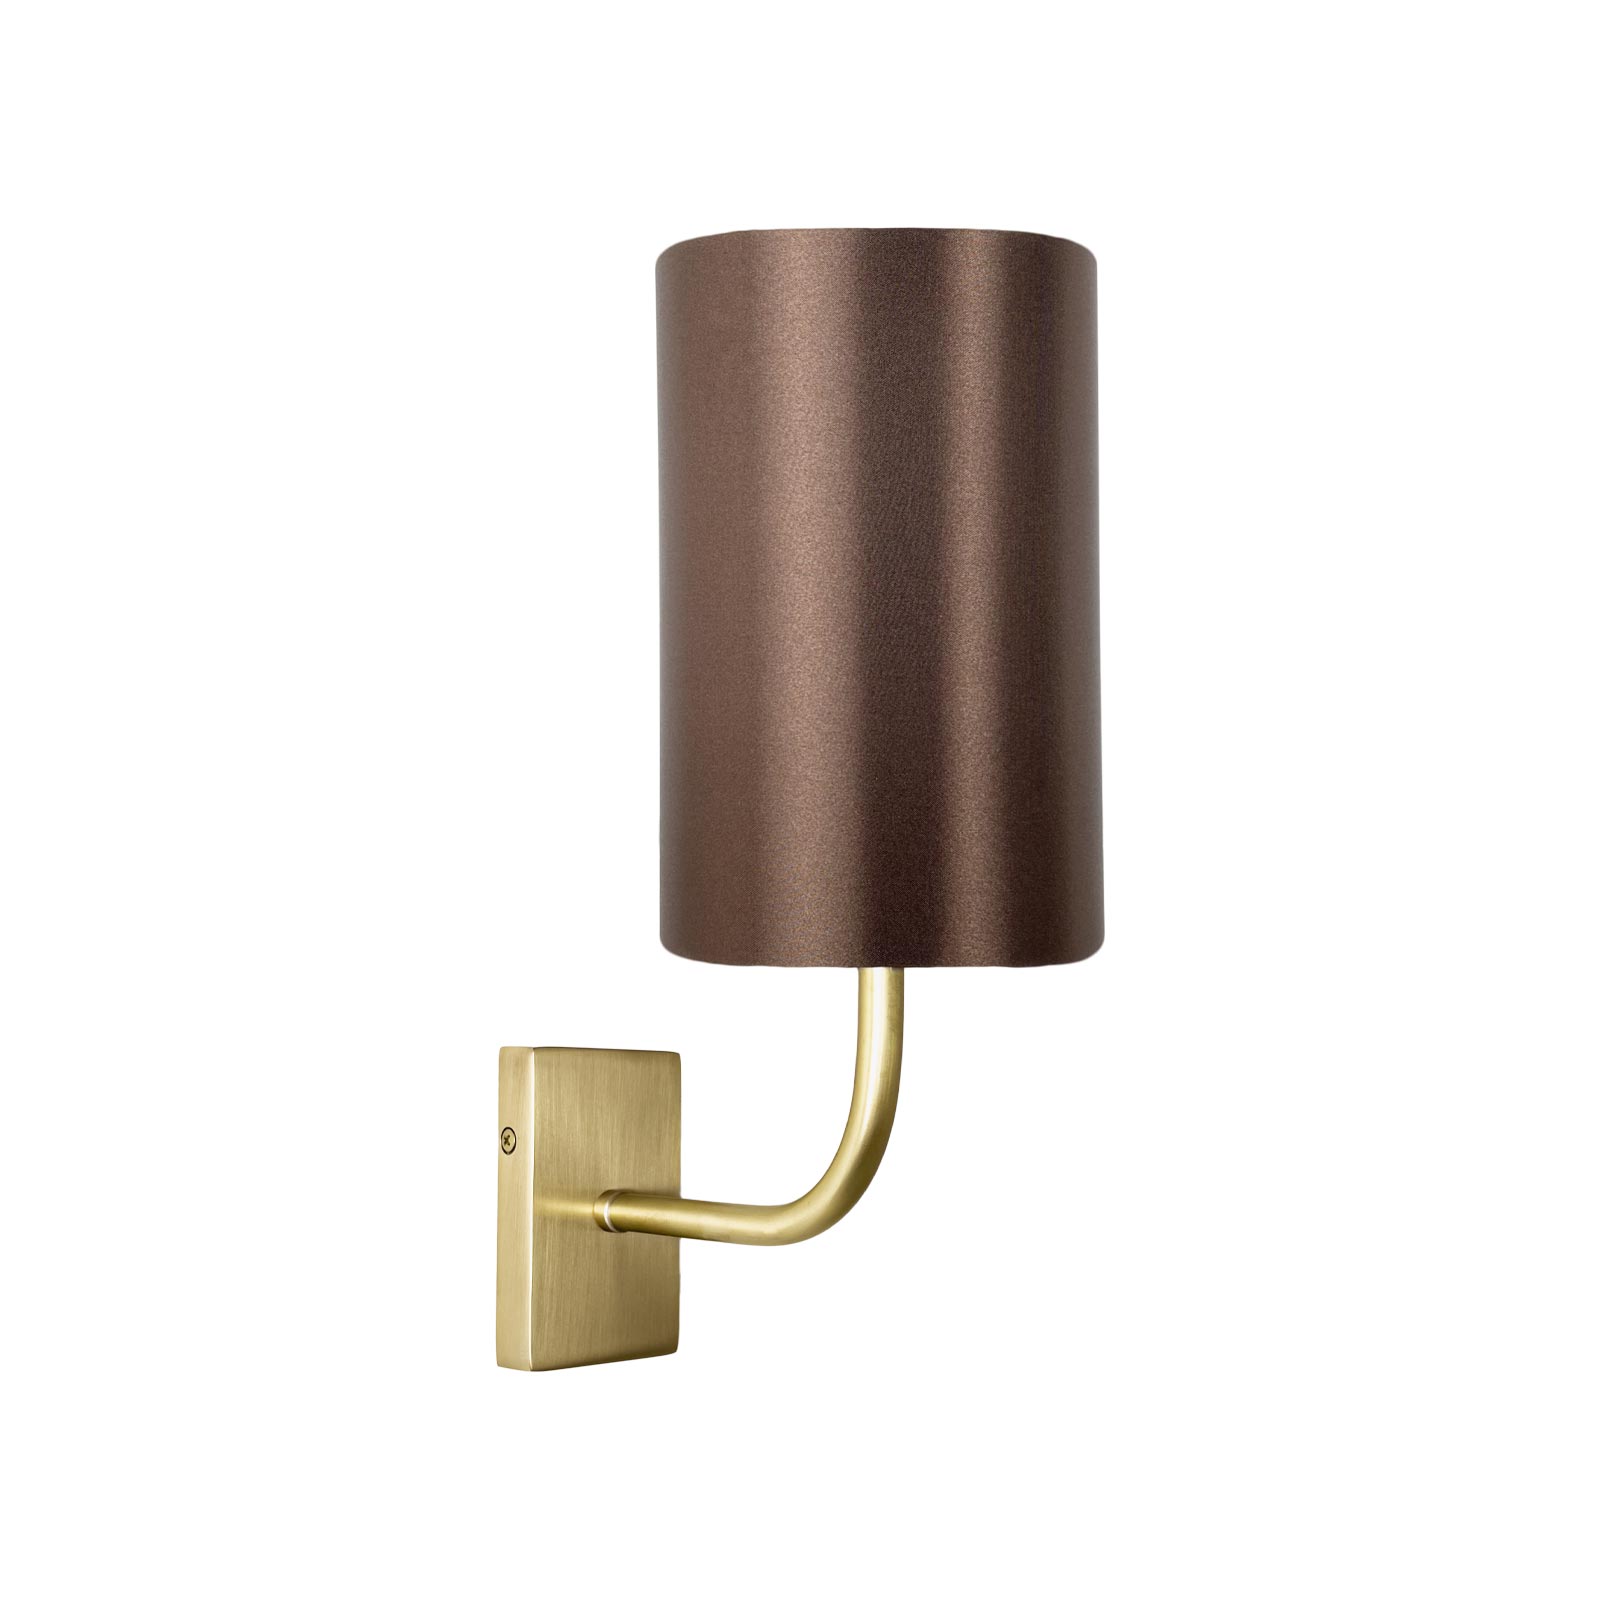 Wandlampe E27 in Bronze hell Braun Stoff Messing Modern